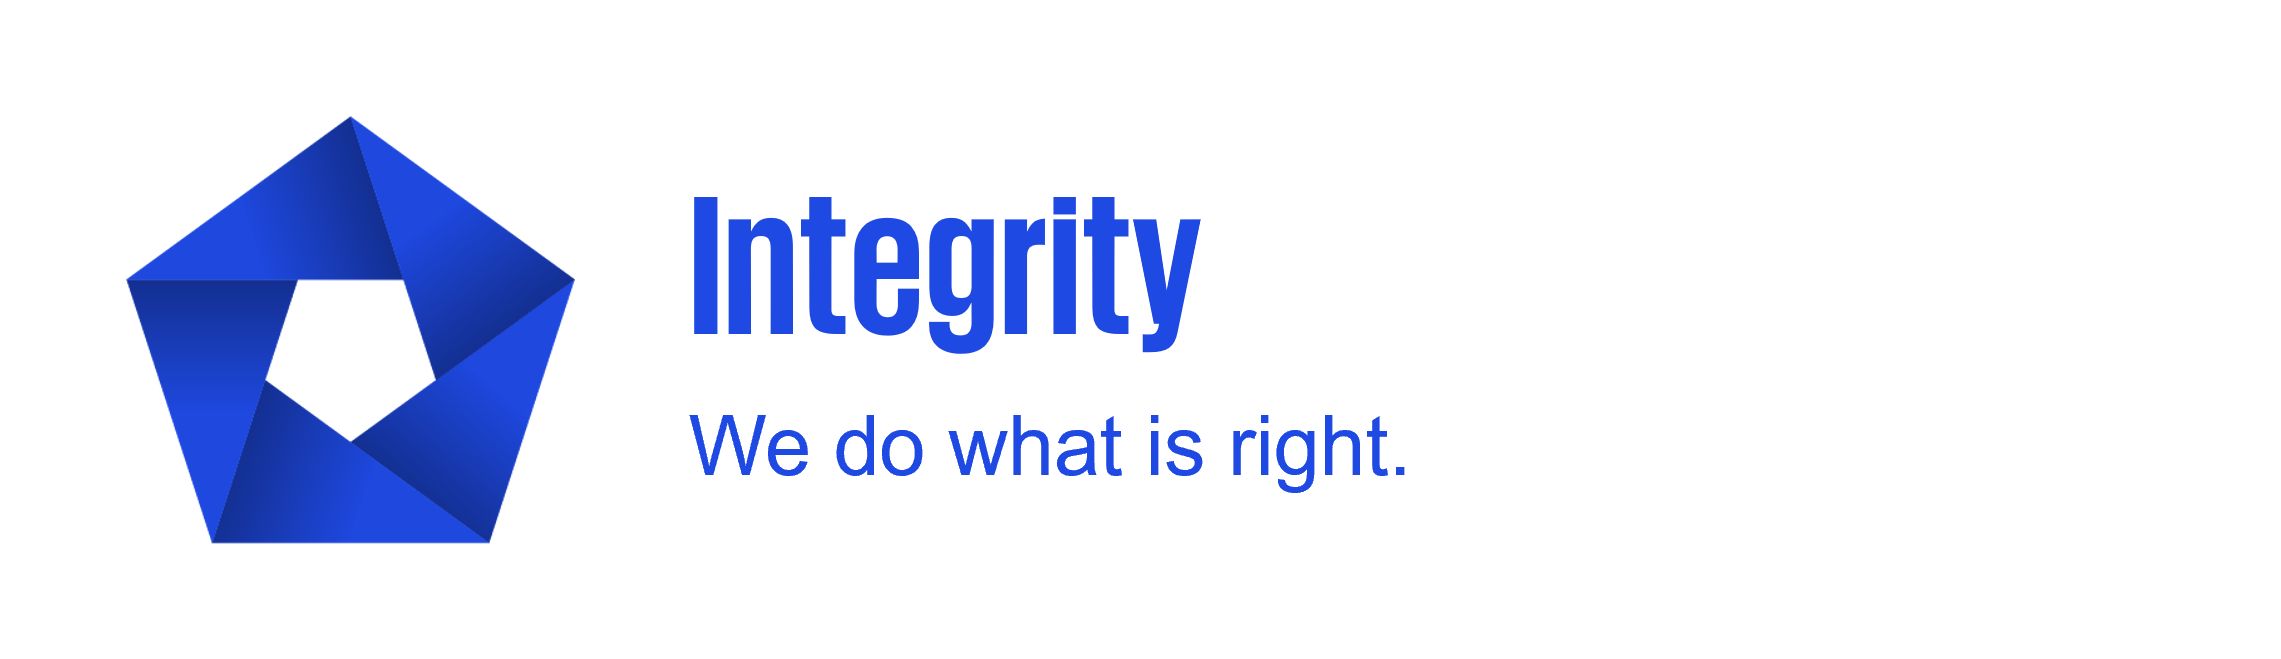 Integrity: 我們堅持做對的事